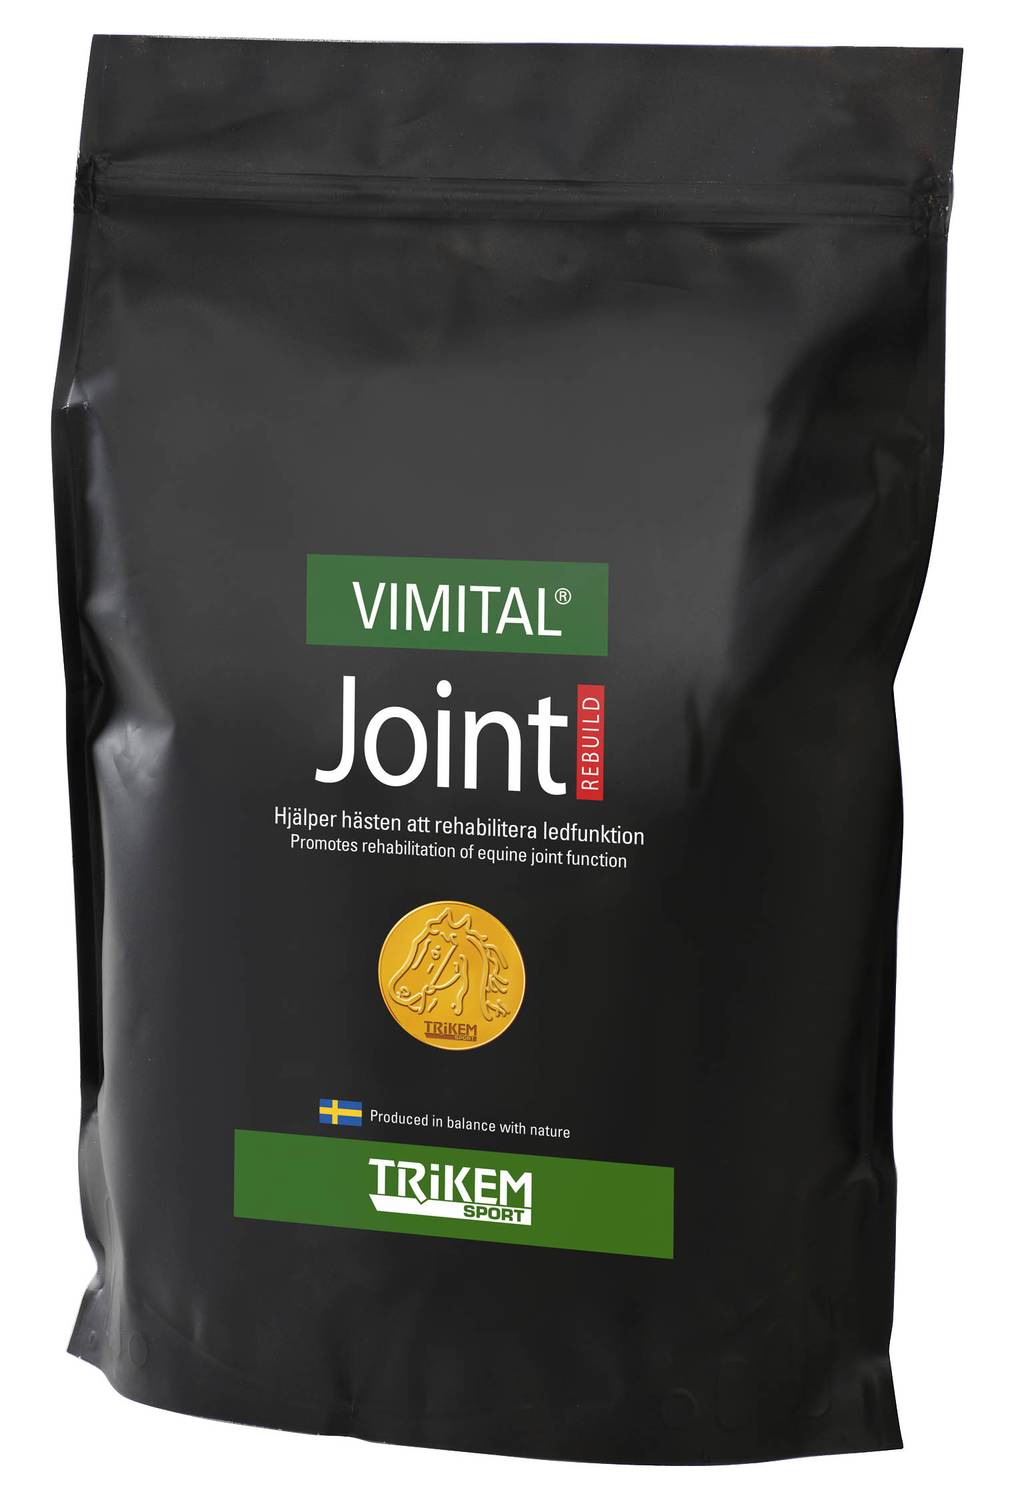 Vimital Joint